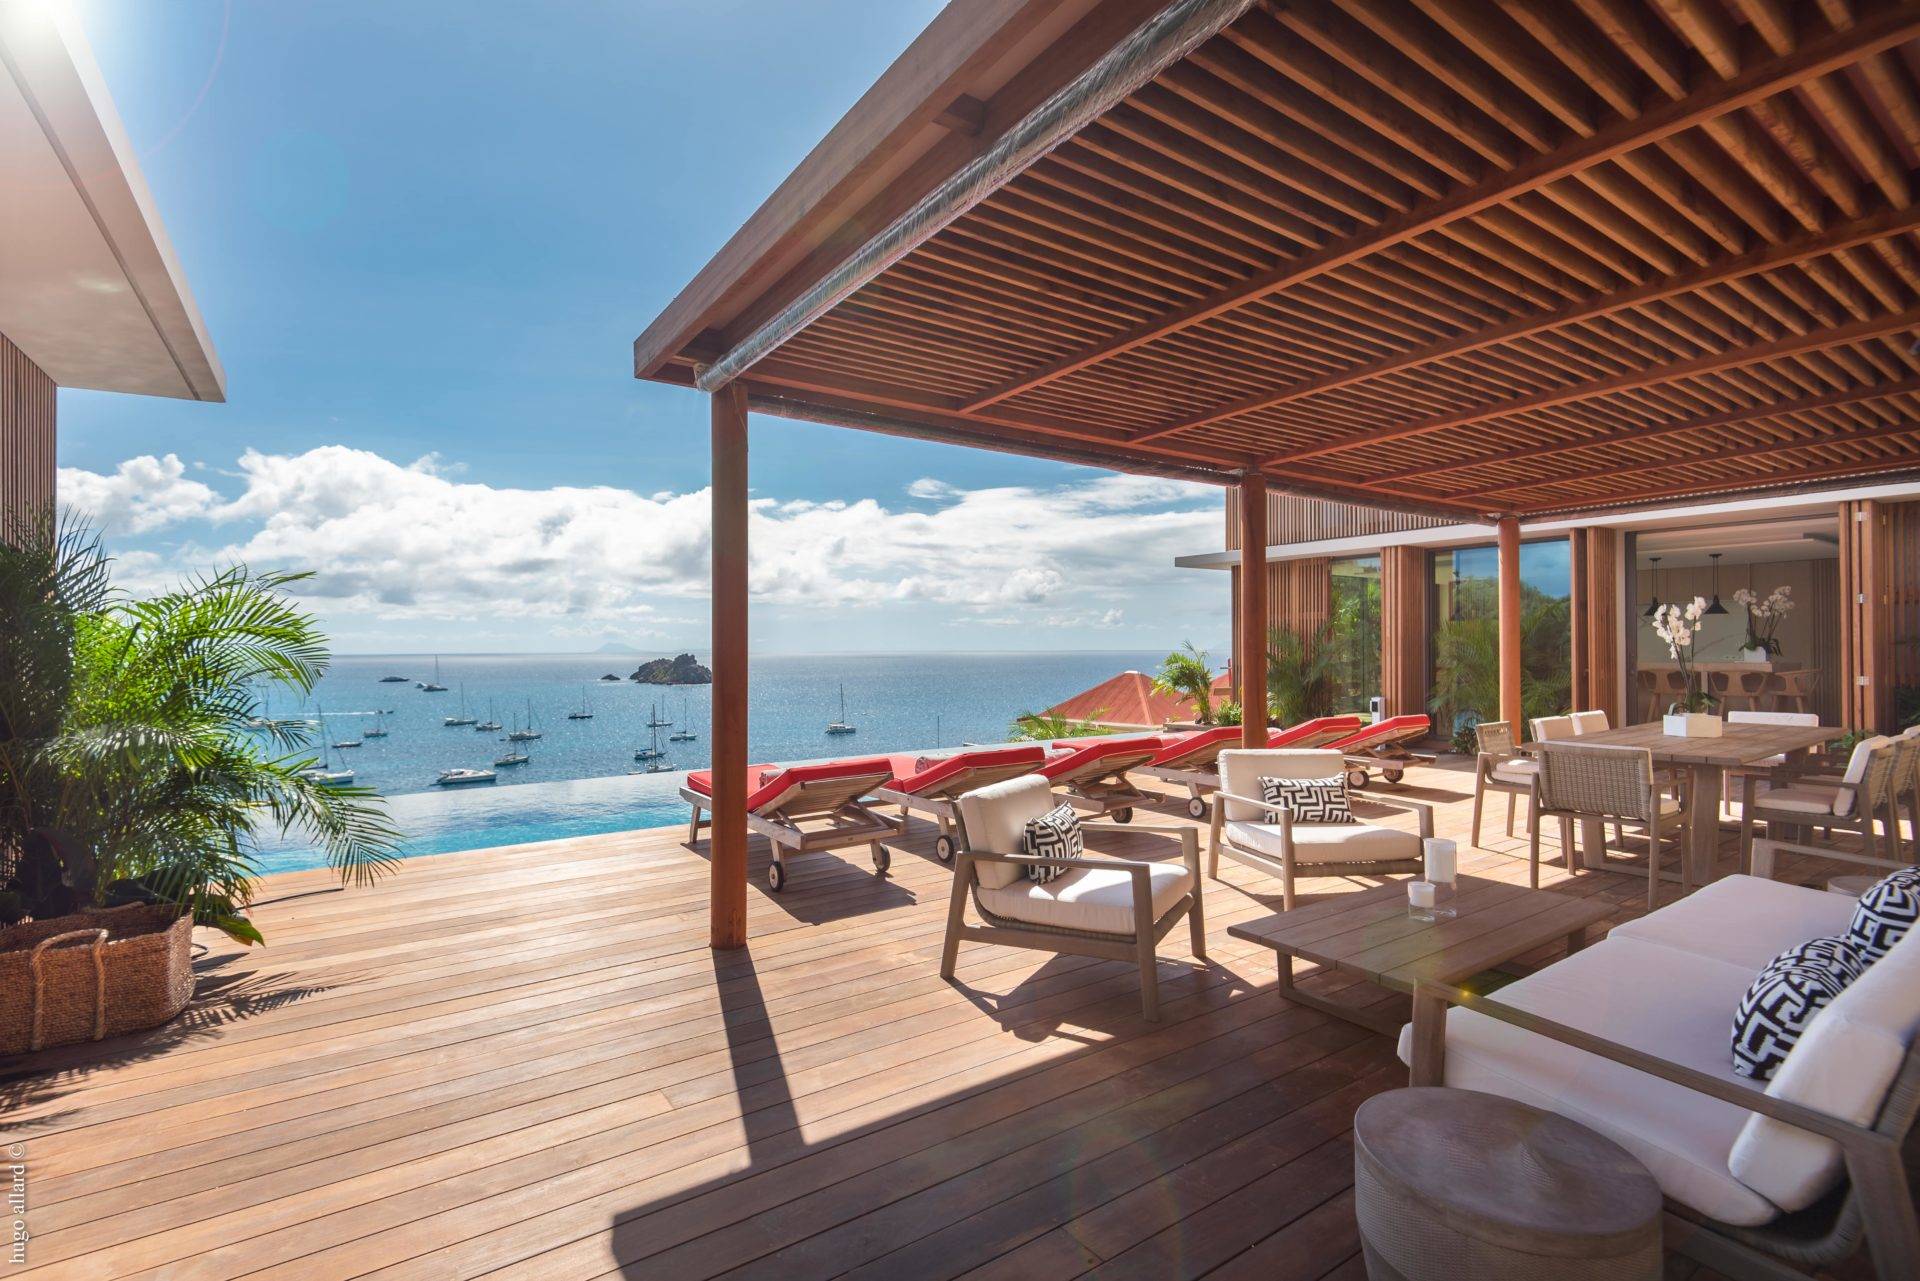 2-ideal-st-barth-villa-rentals-bianca-corrossol-pool-ocean-view2-min.jpg